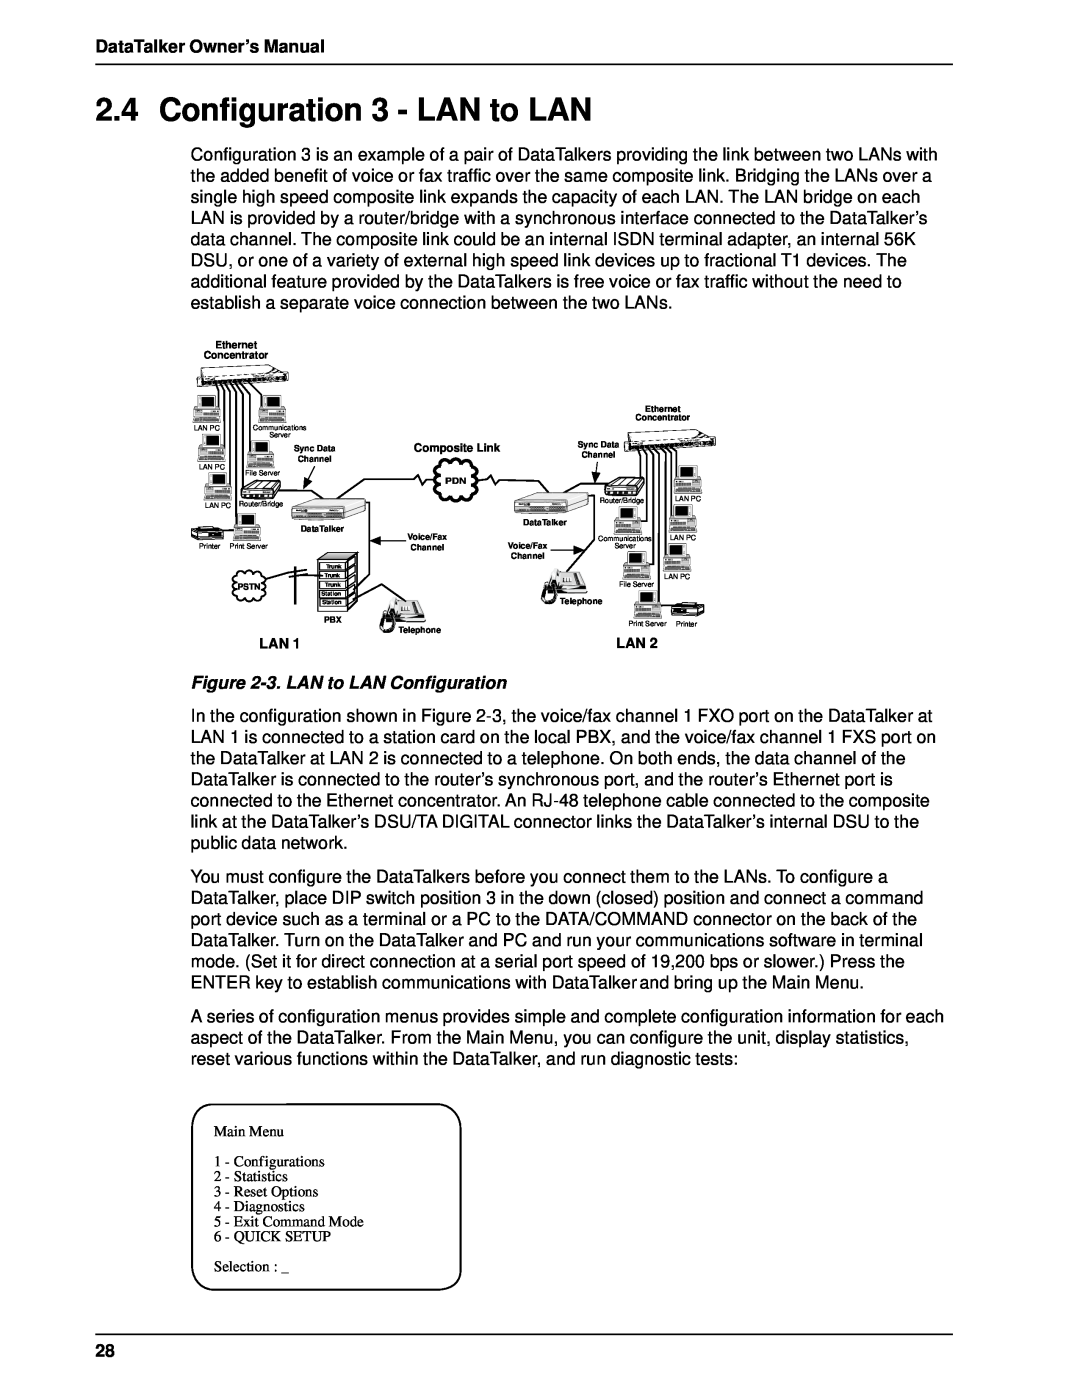 Multi-Tech Systems DT101, DT102 Configuration 3 - LAN to LAN, DataTalker Owner’s Manual, 3. LAN to LAN Configuration 